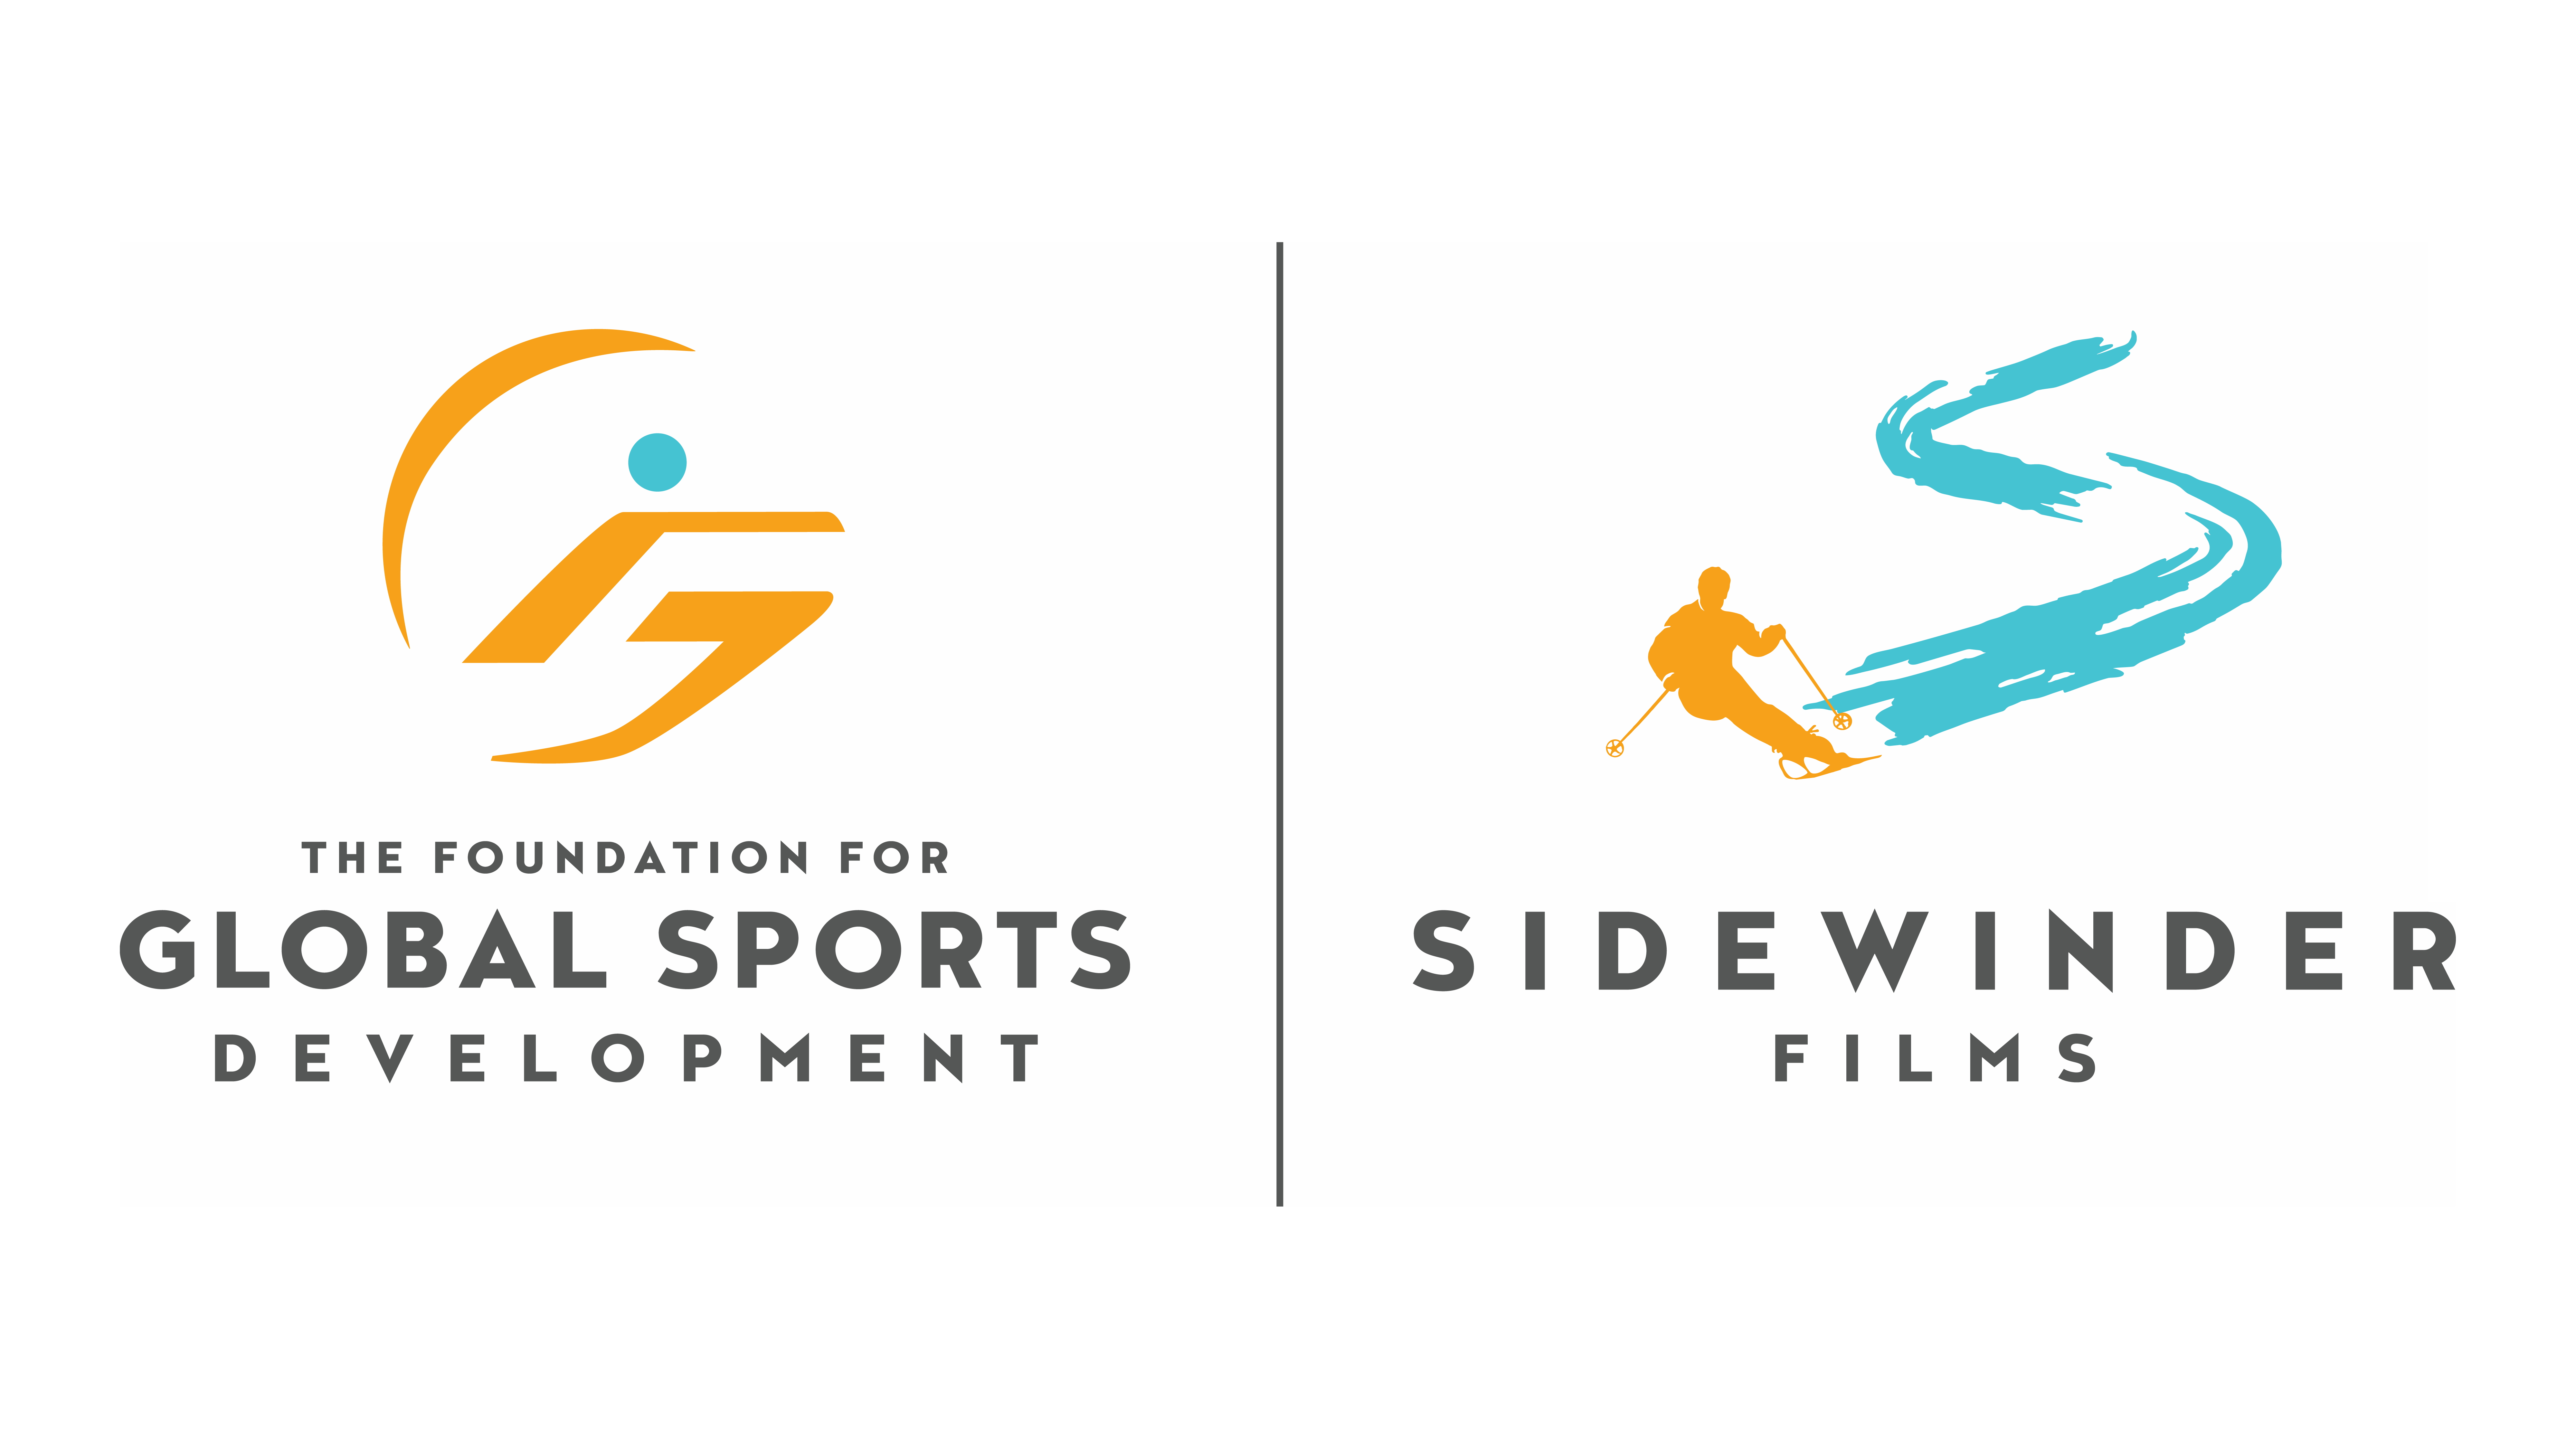 The Foundation for Global Sports Development logo